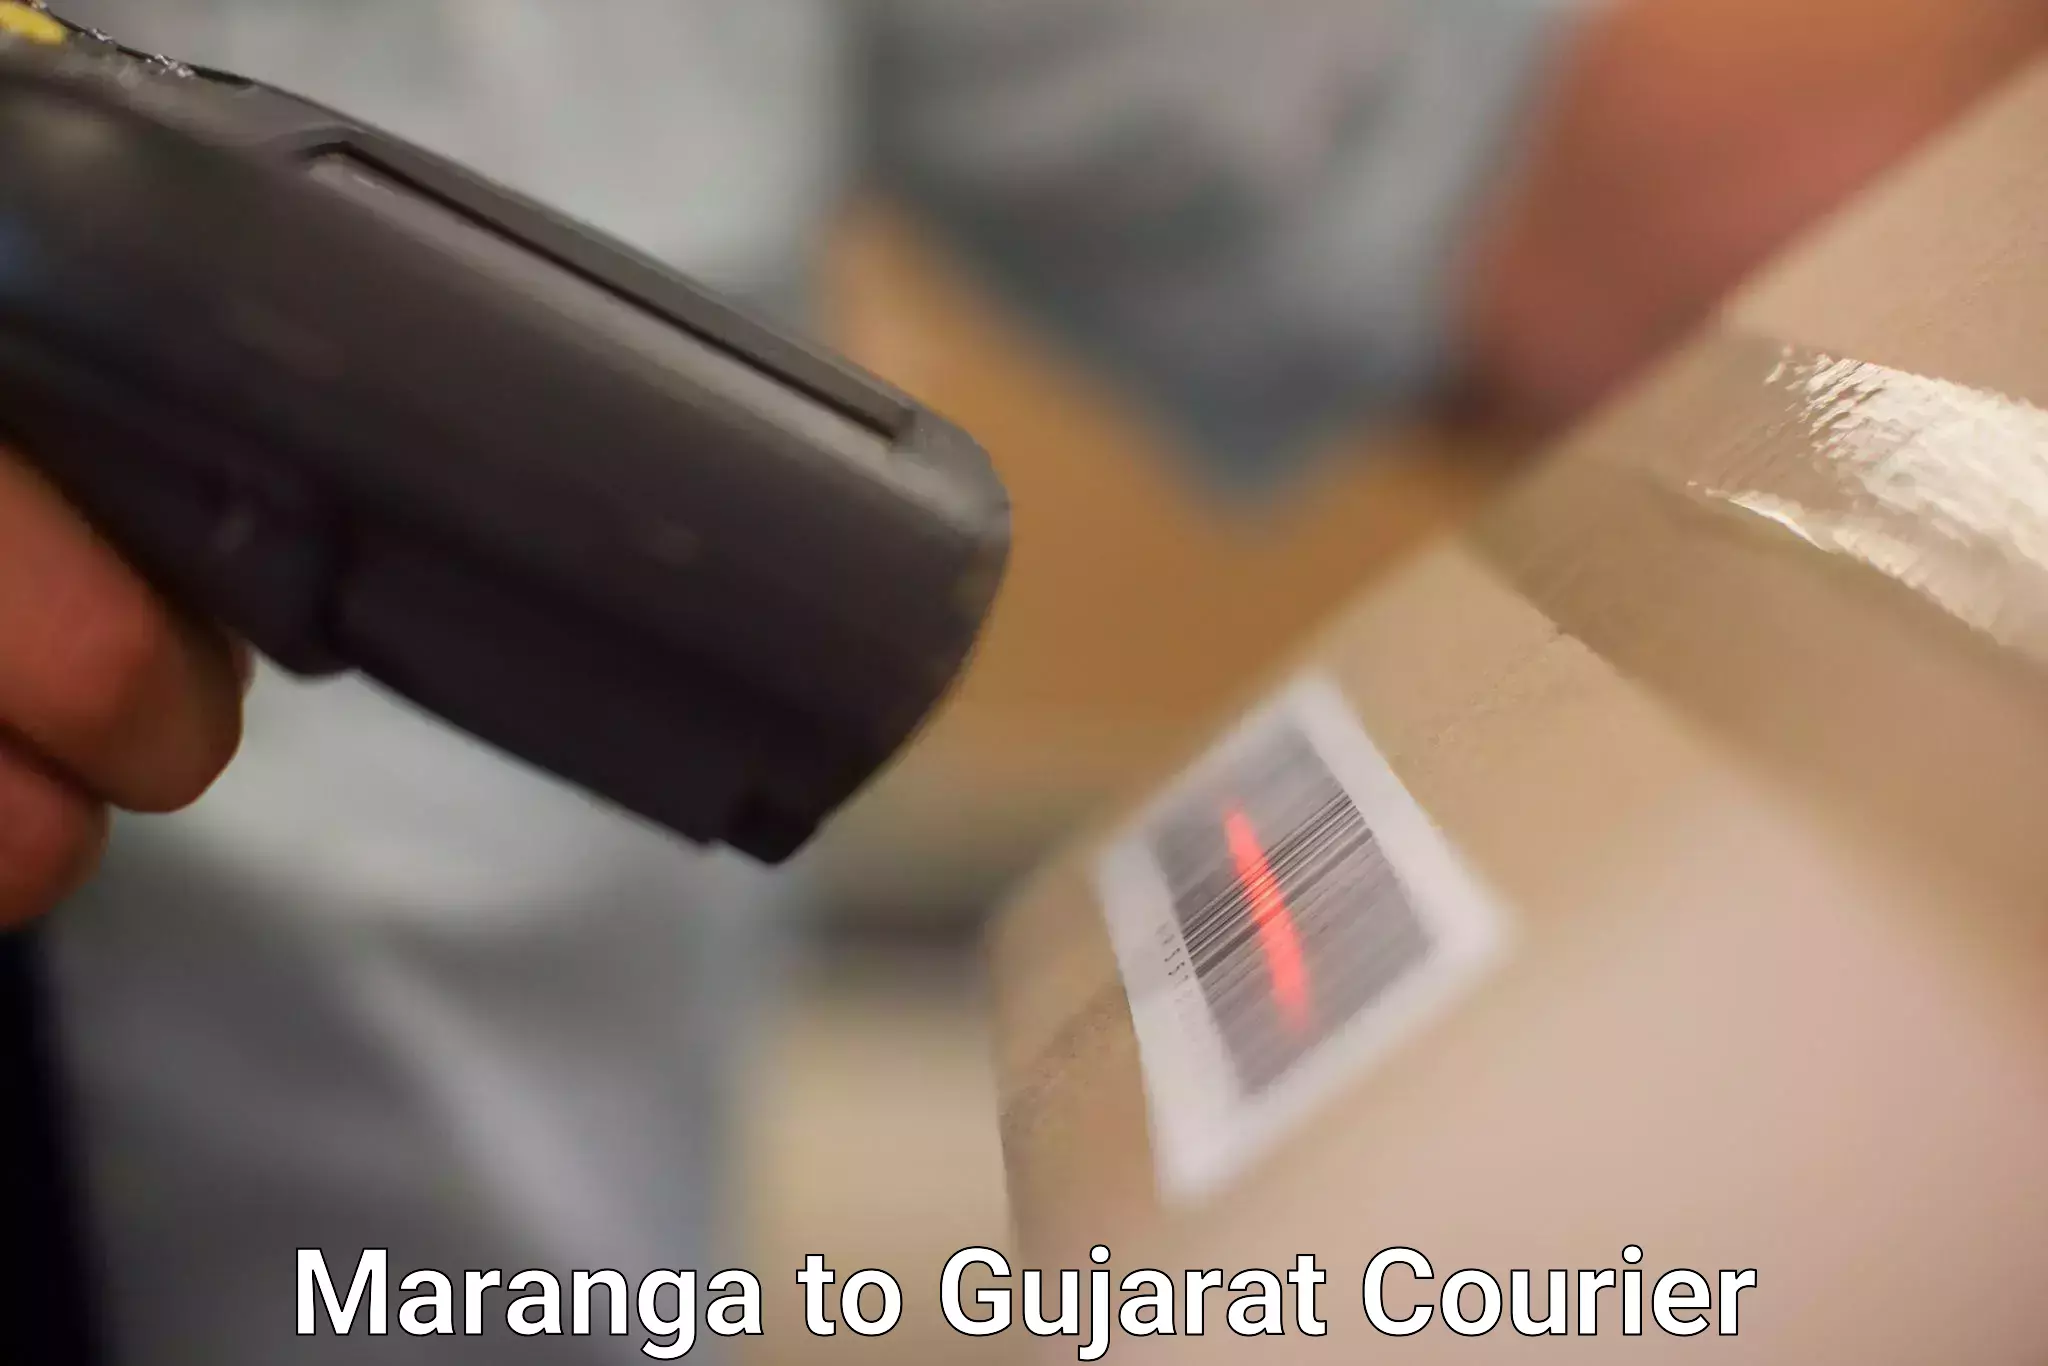 Courier app Maranga to Gujarat